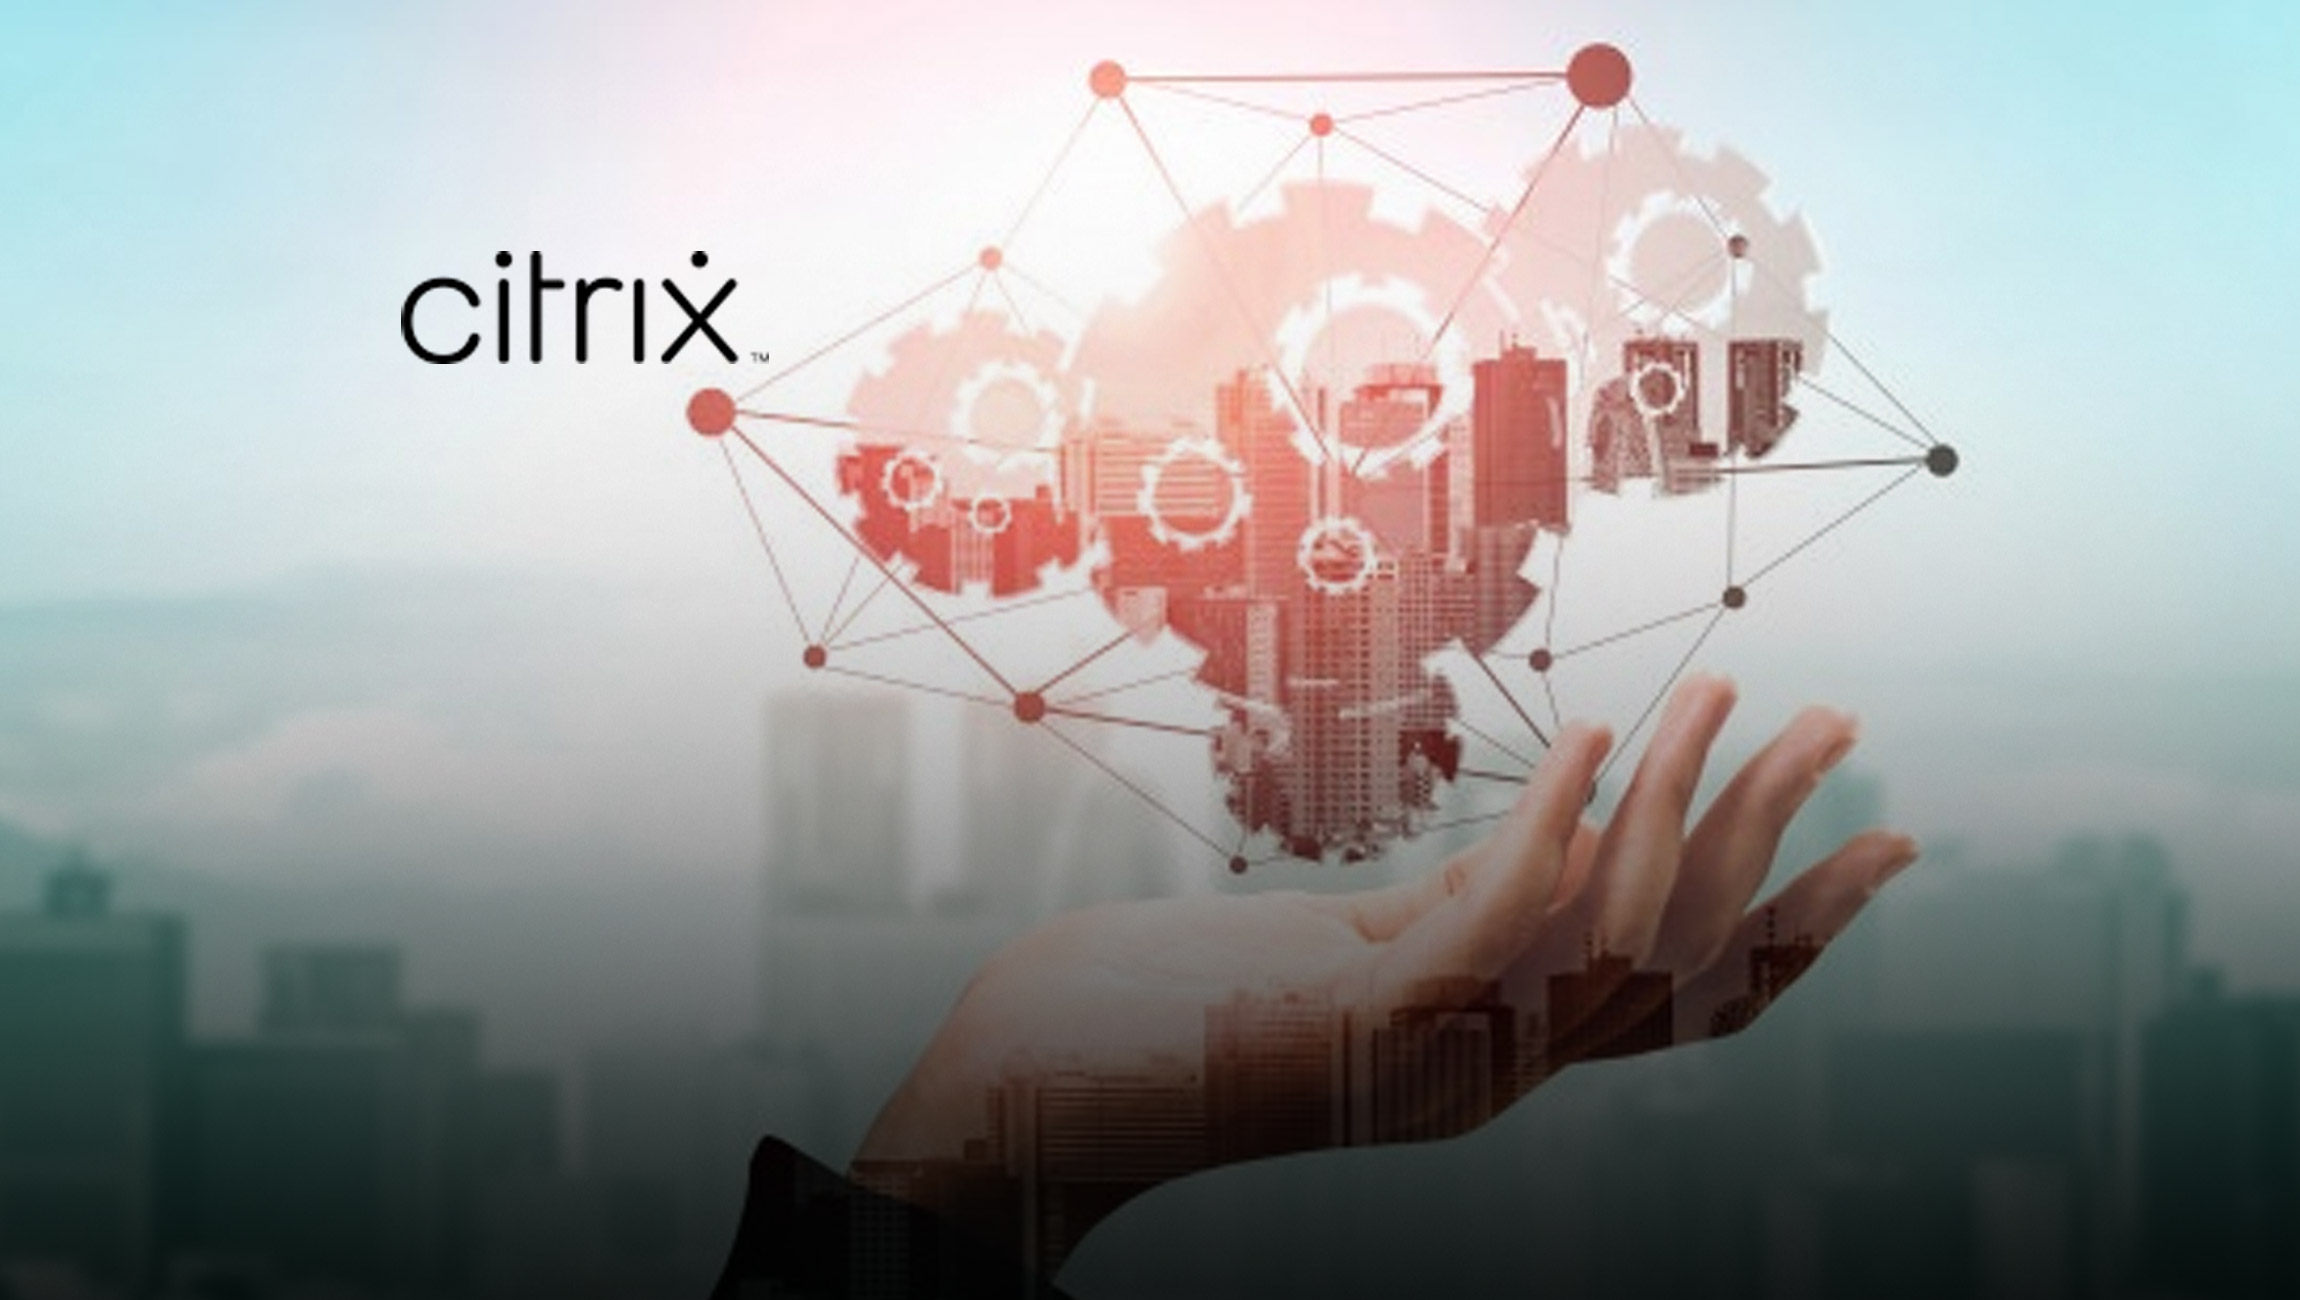 Work 2035: Citrix Research Reveals a More Intelligent Future